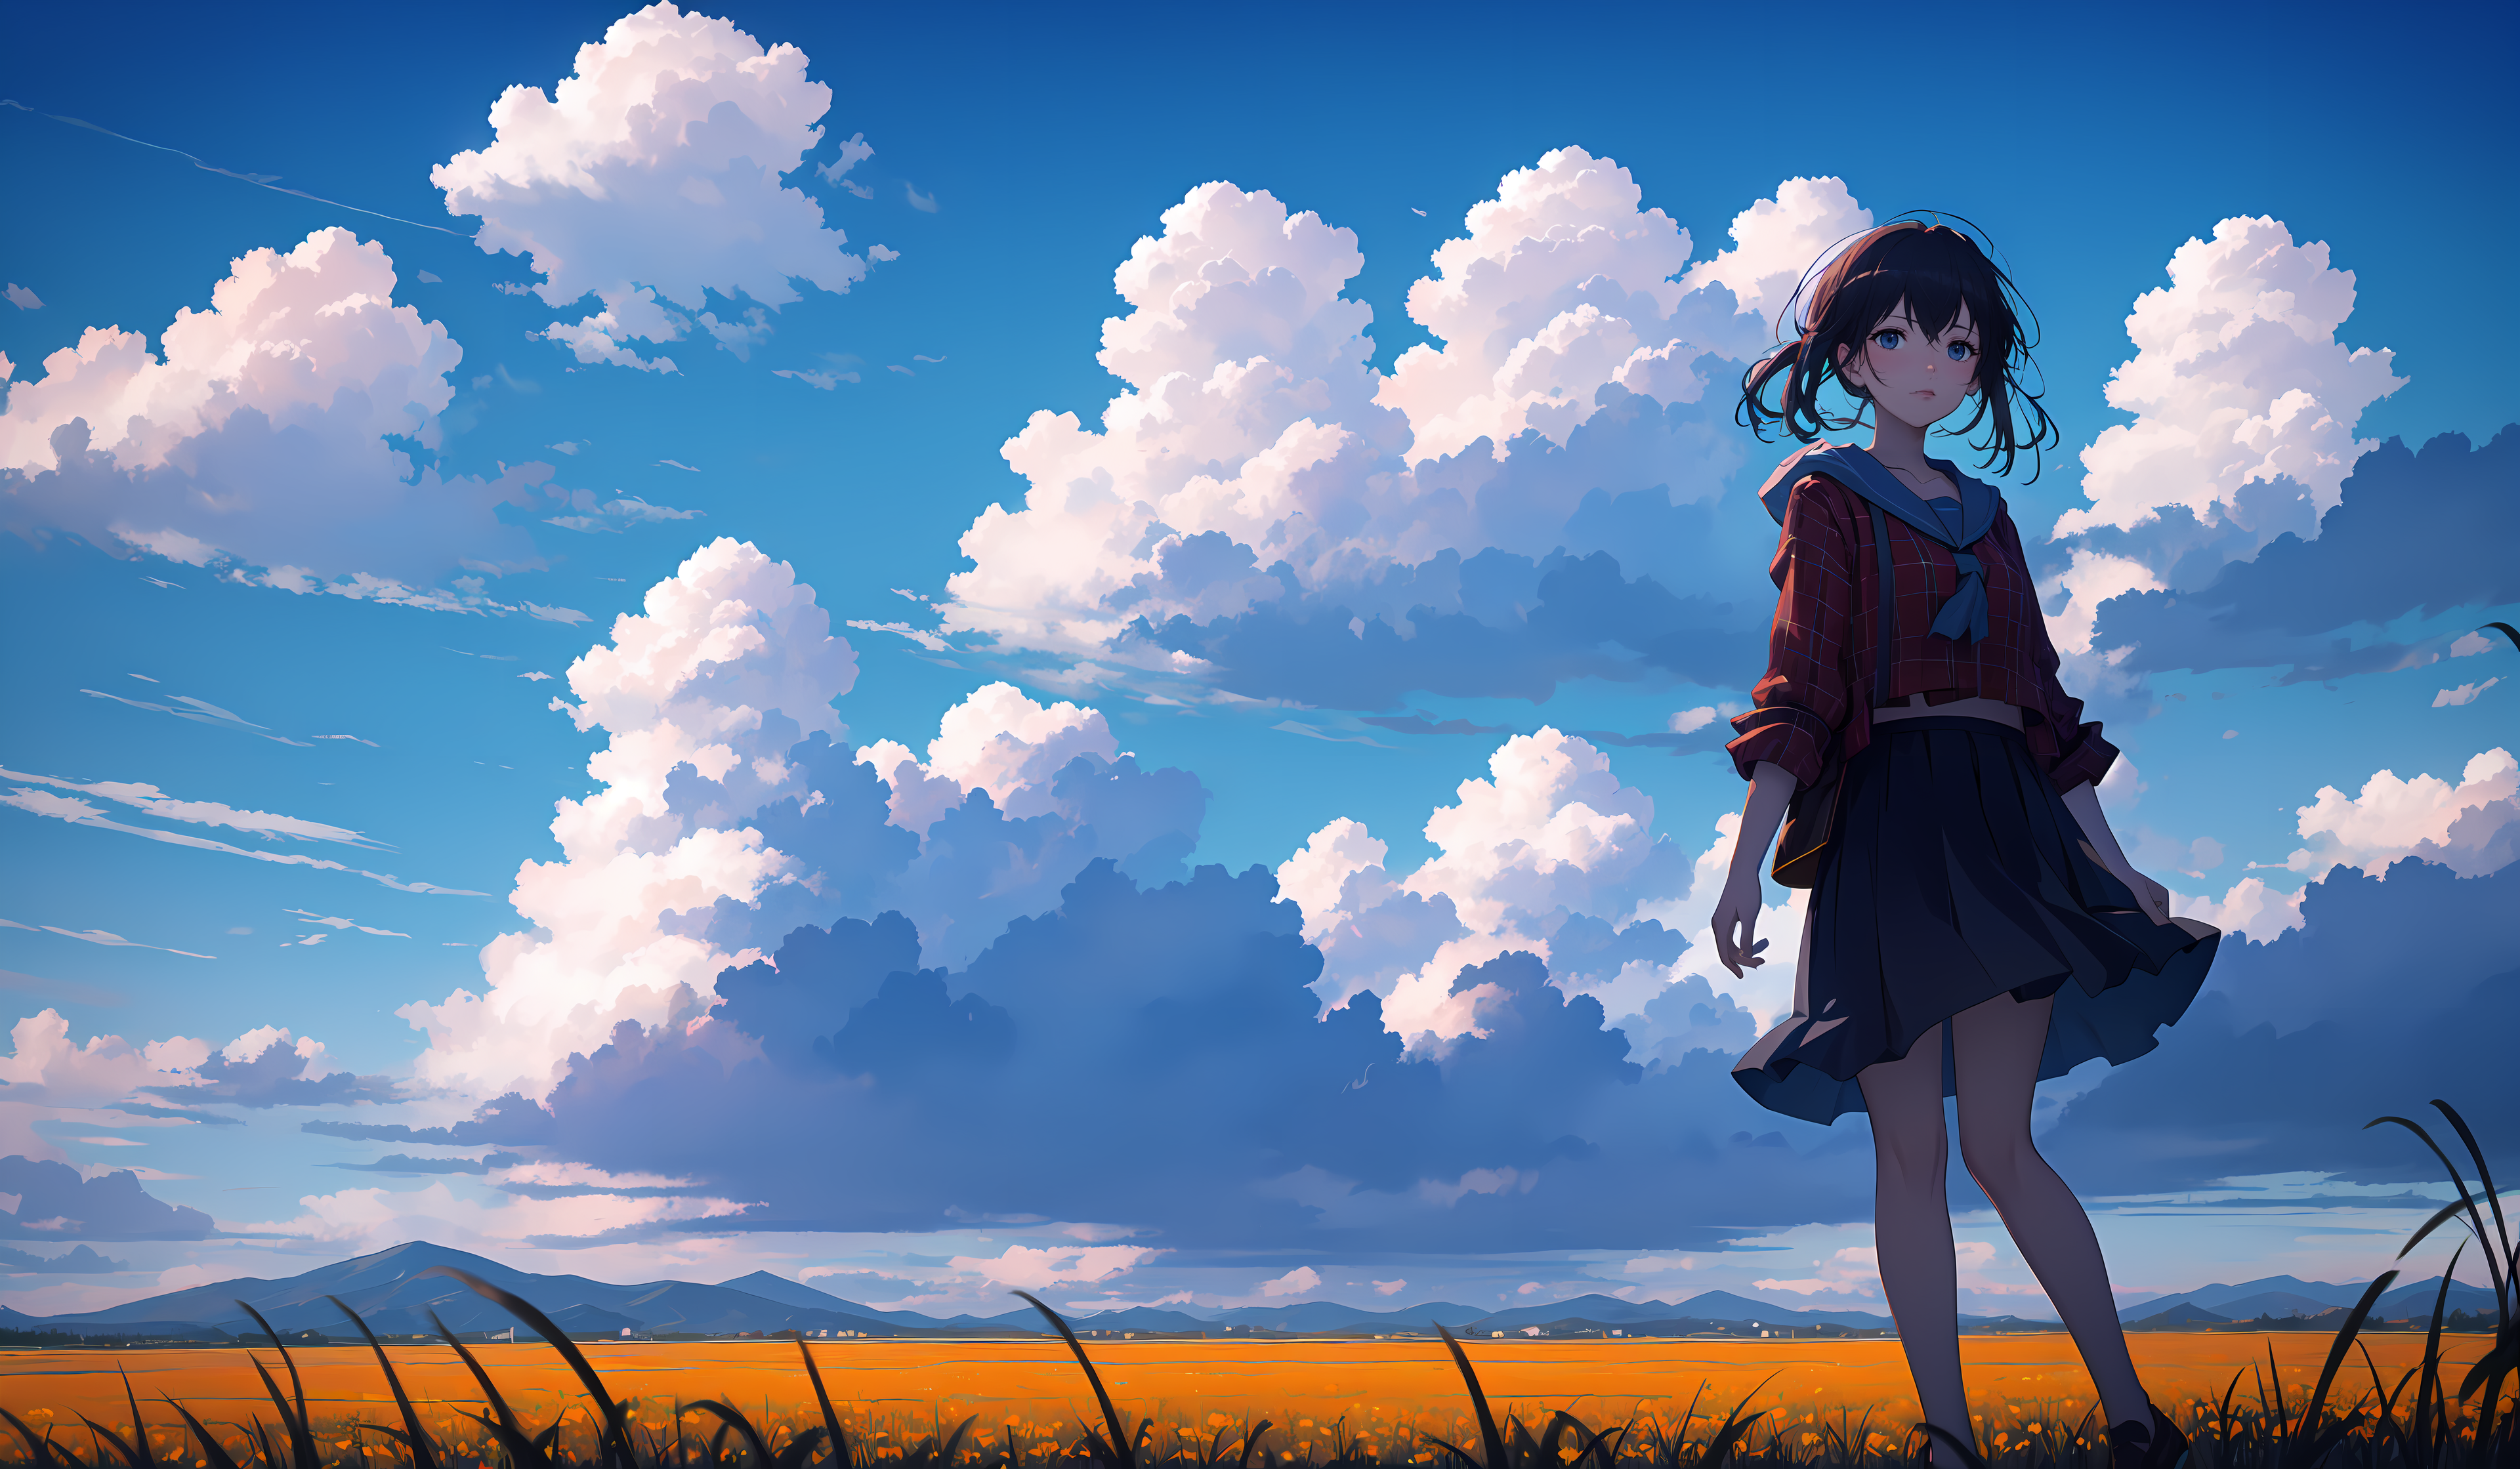 Anime Girl 4k Ultra HD Wallpaper by Abyss